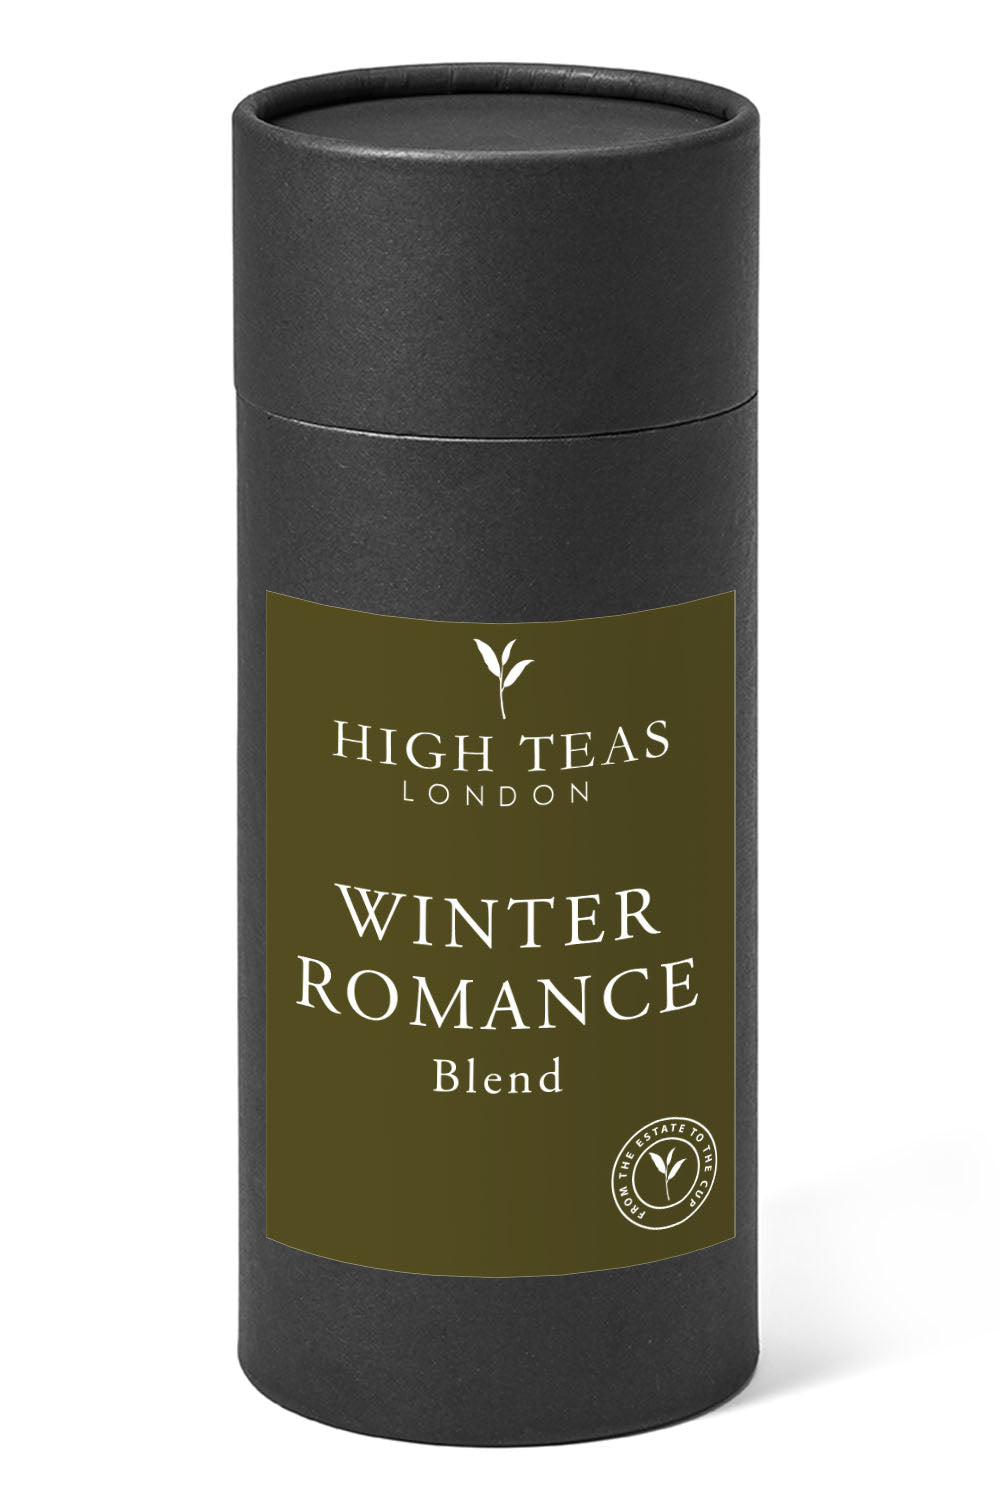 Winter Romance-150g gift-Loose Leaf Tea-High Teas